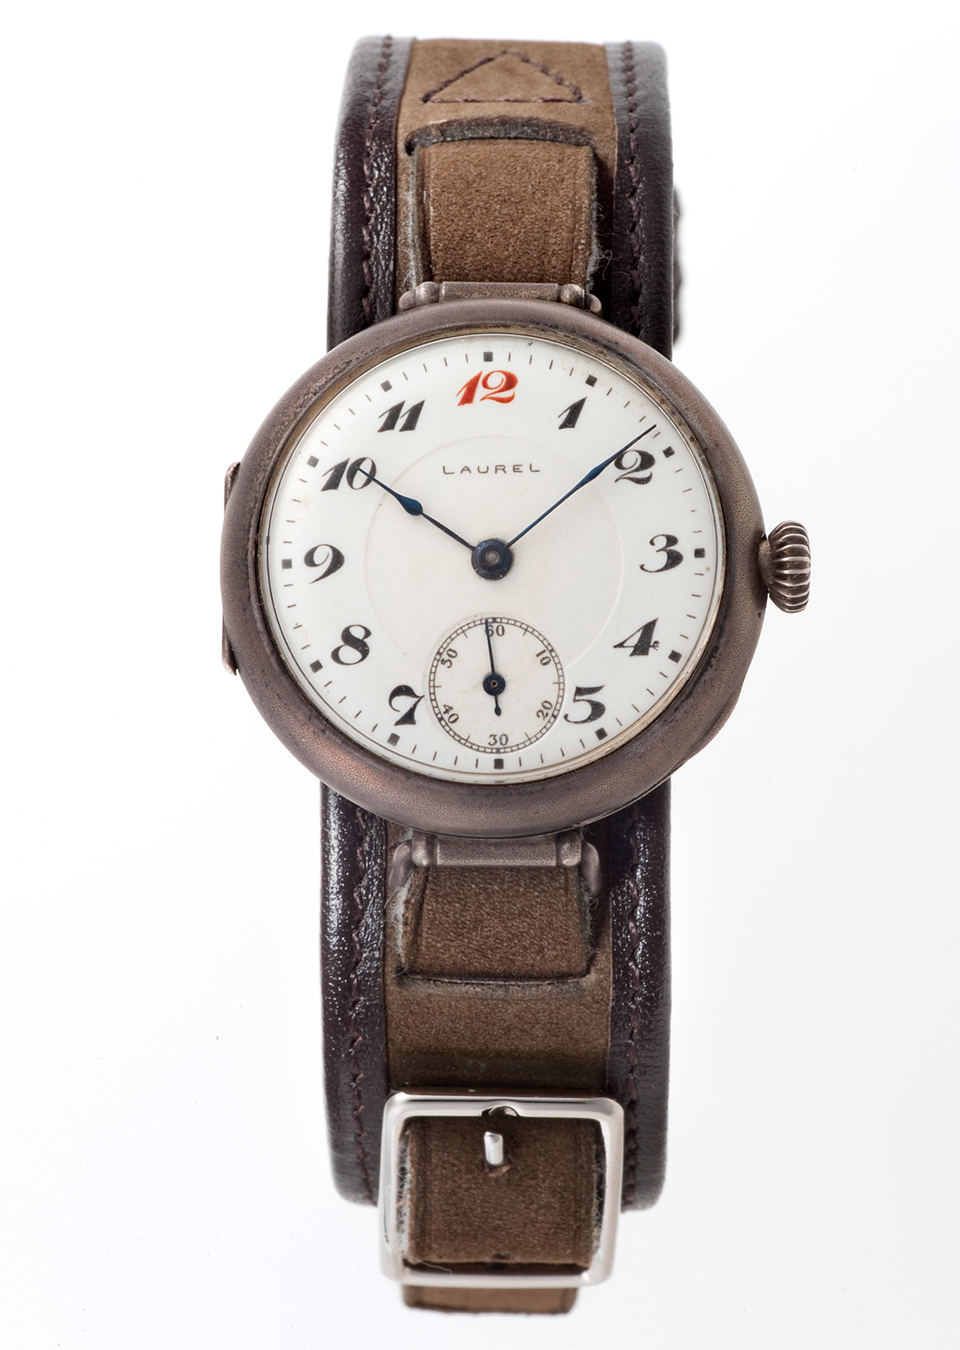 Grand Seiko(グランドセイコー) 国産初の腕時計「ローレル」